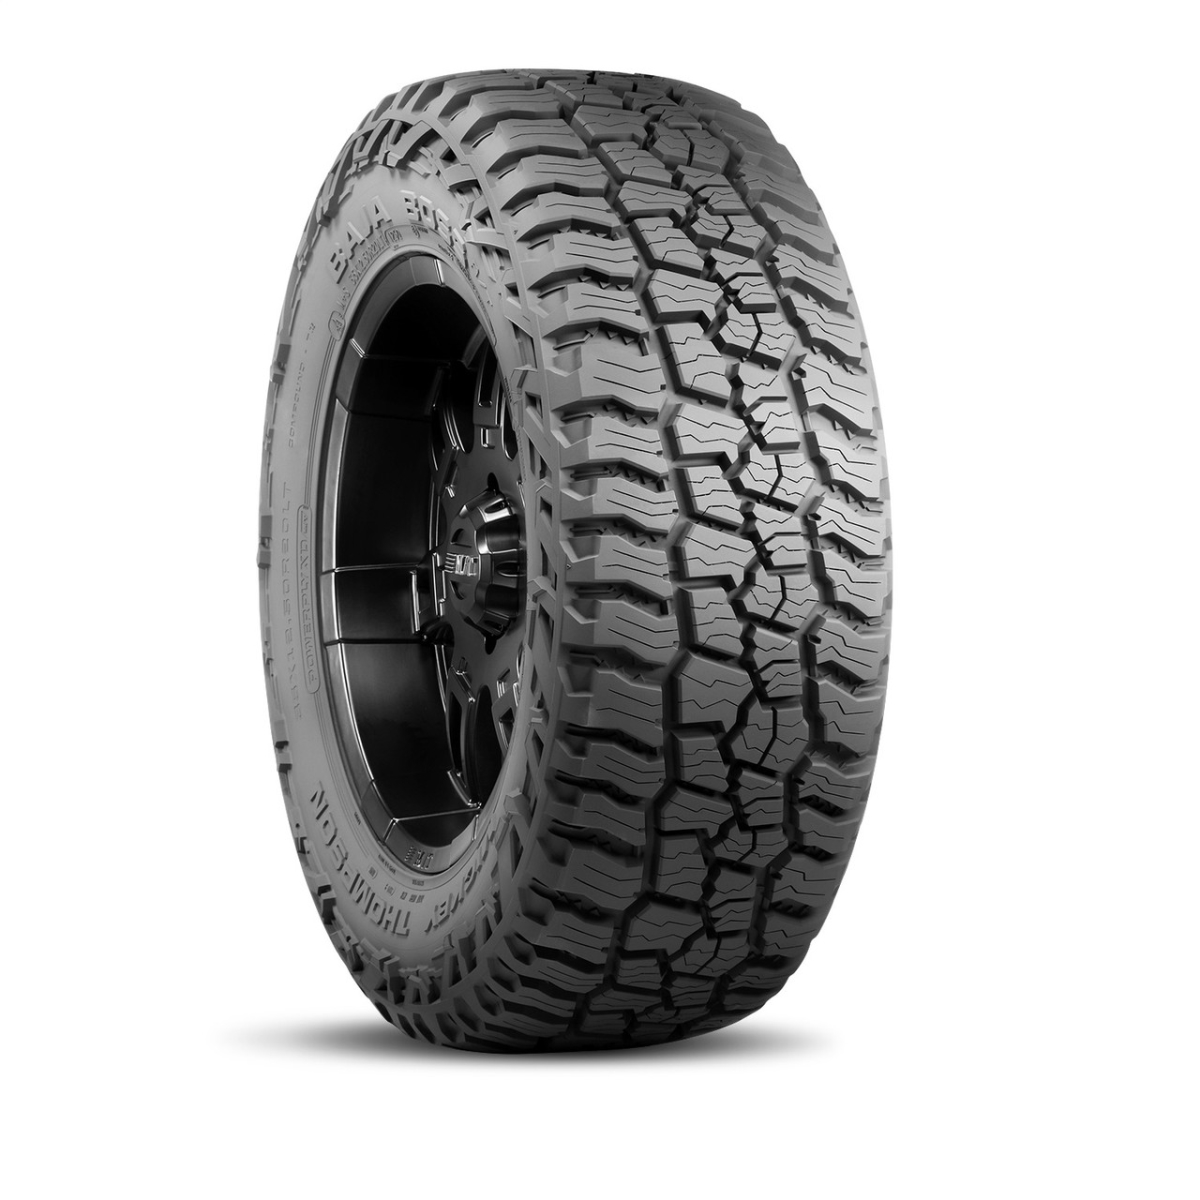 Picture of Mickey Thompson 39592 LT285-60R20 125-122Q Baja Boss Asymmetric Tread Tire